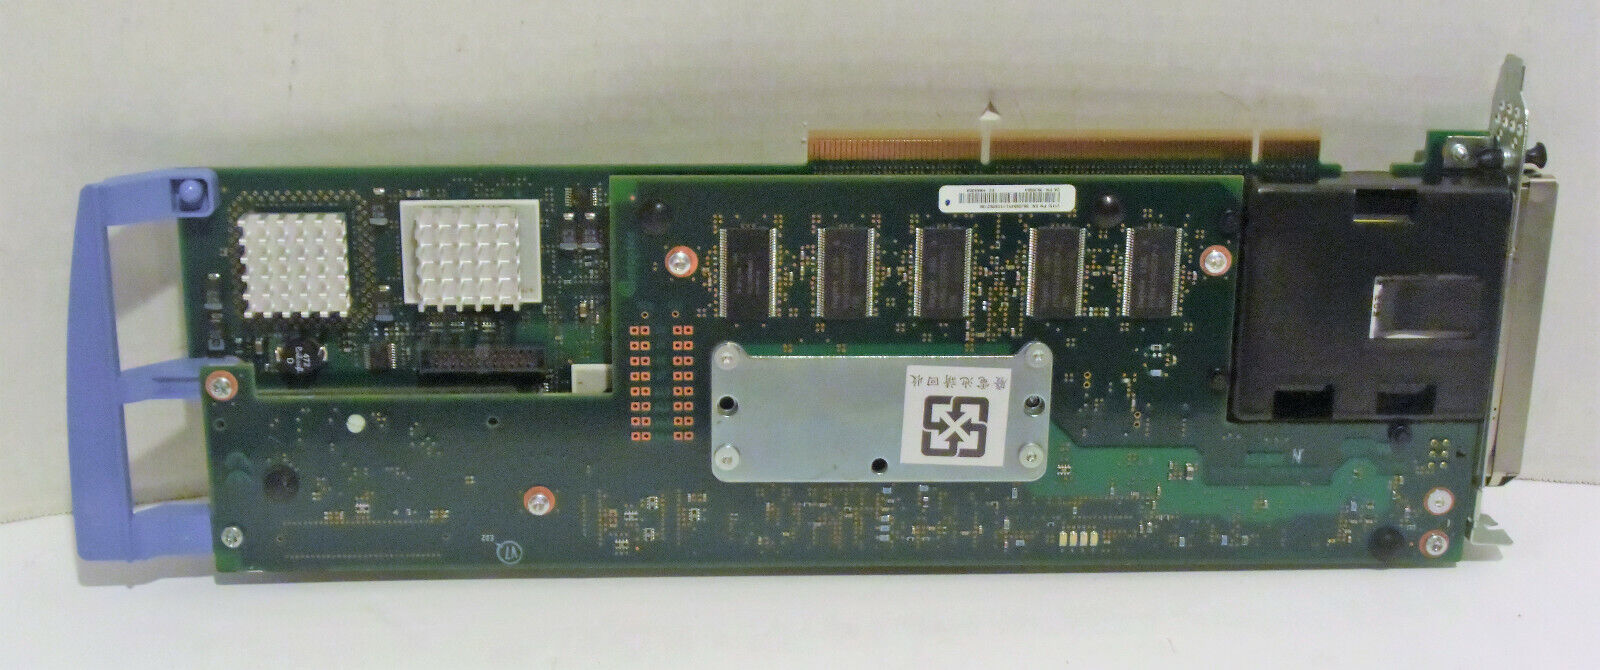 IBM 2780-9406 2780 9406 PCI-X SCSI RAID CARD W/CACHE 39J5057 97P6099 42R6927 